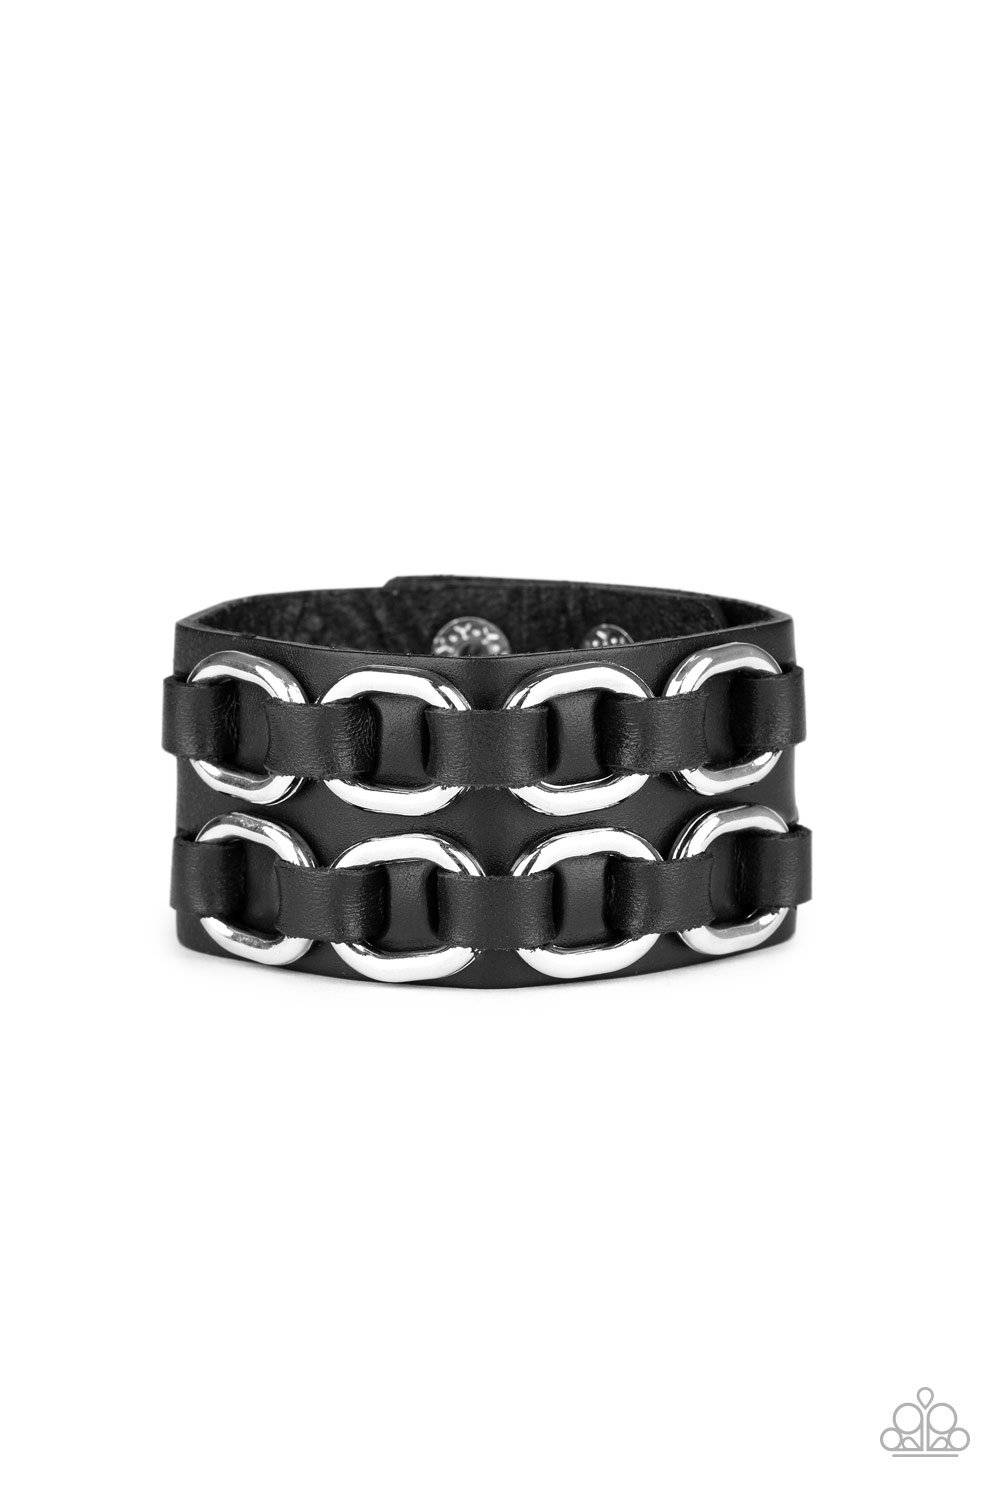 Throttle It Out - Black Leather Bracelet - Paparazzi Accessories - GlaMarous Titi Jewels